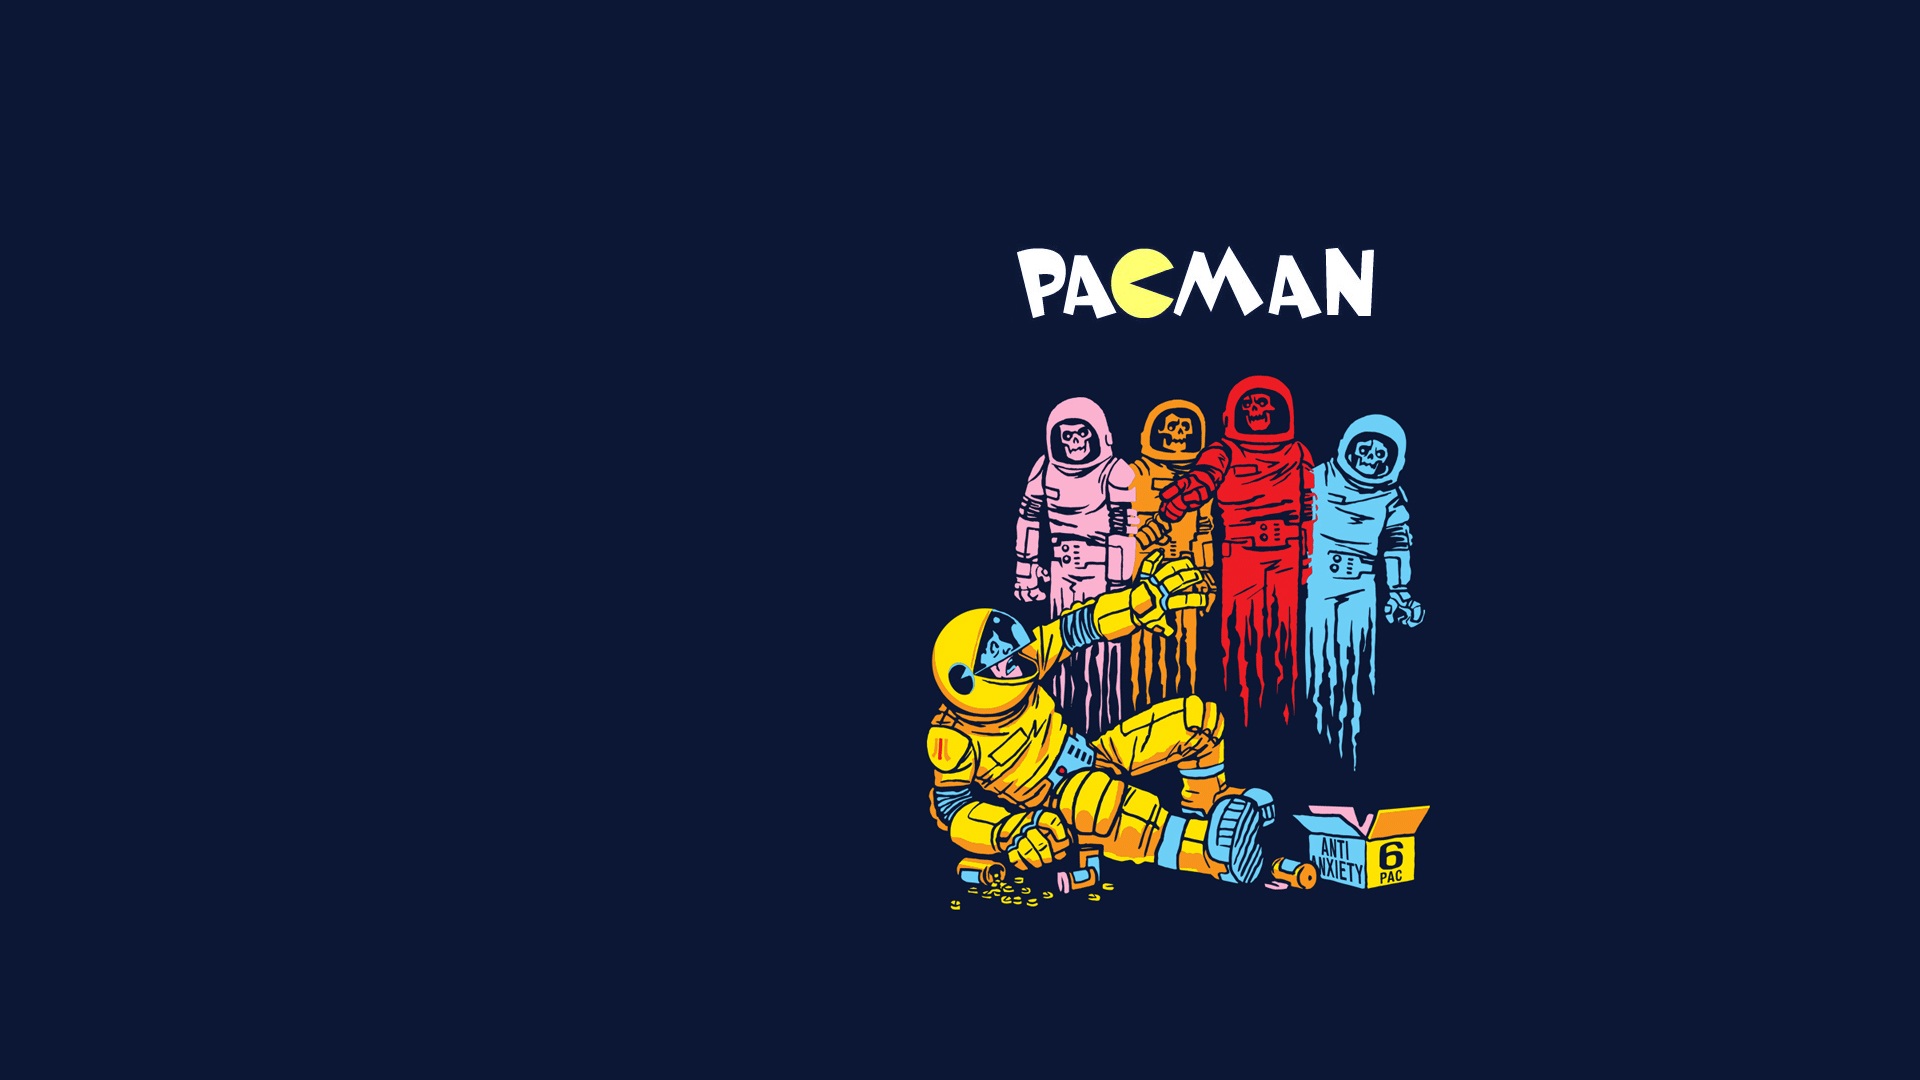 Pacman Love Wallpaper This